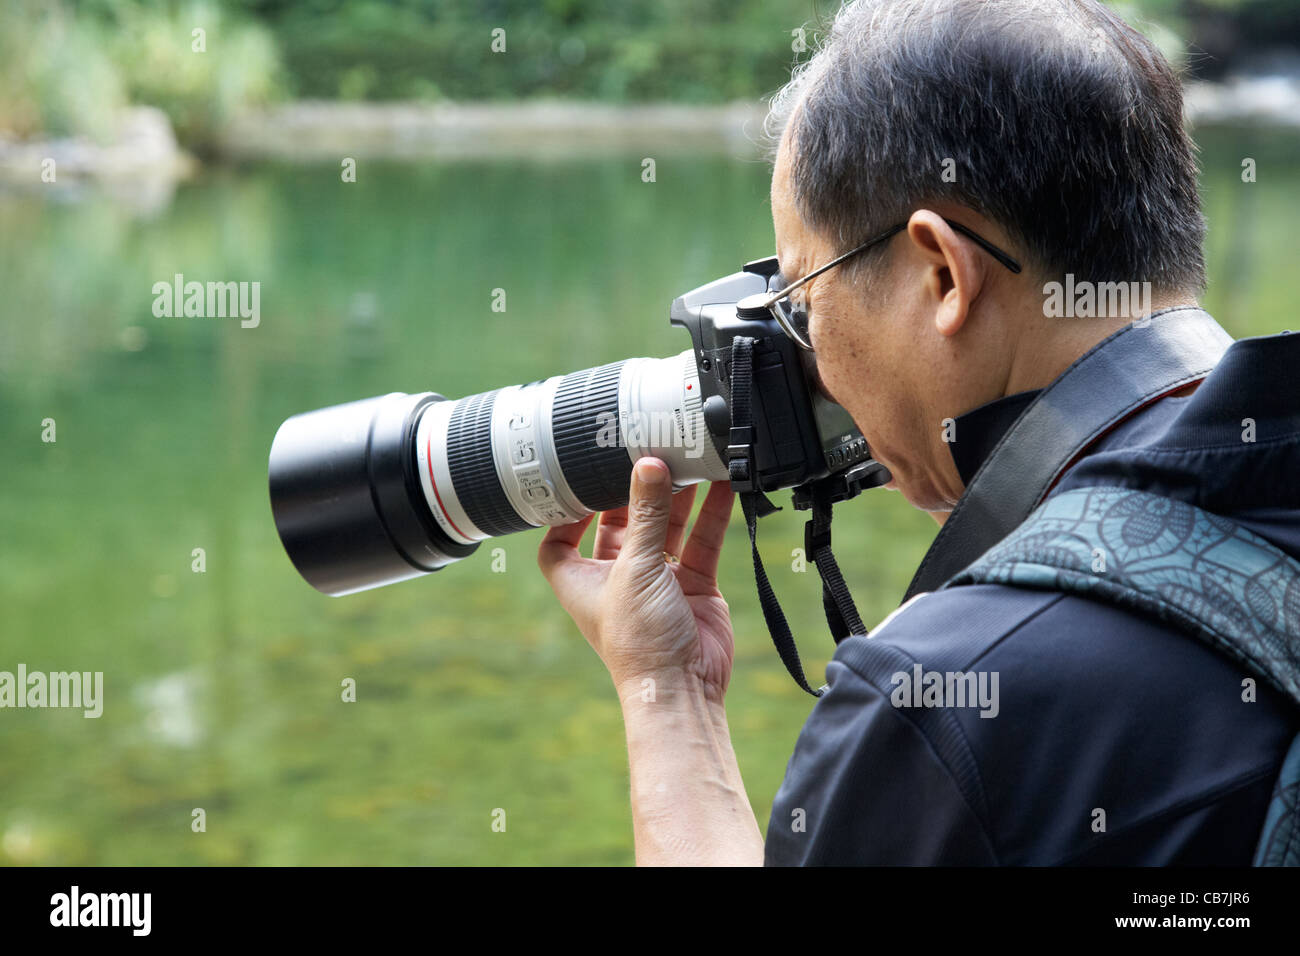 männlichen chinesischen Fotografen fotografieren mit Canon Kamera Insel  Hongkong, Sonderverwaltungsregion Hongkong, china Stockfotografie - Alamy